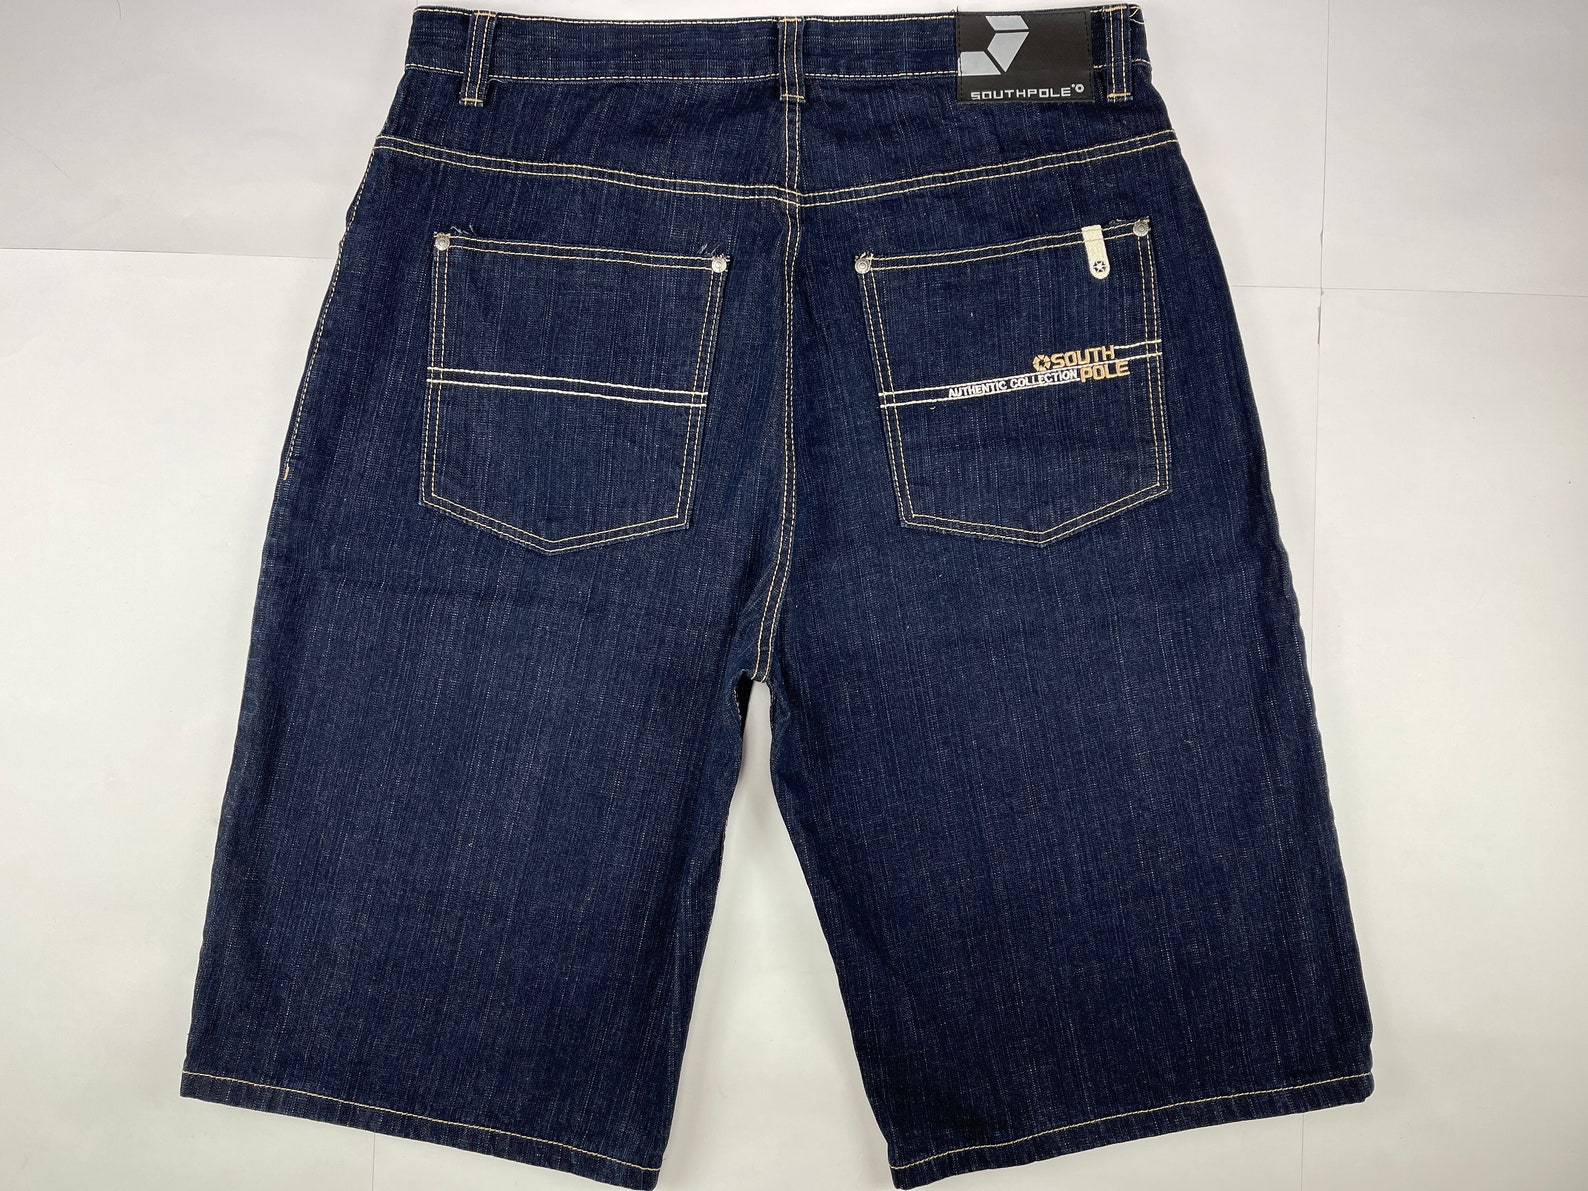 Southpole Shorts Vintage South Pole Jeans Shorts 90s Hip Hop - Etsy